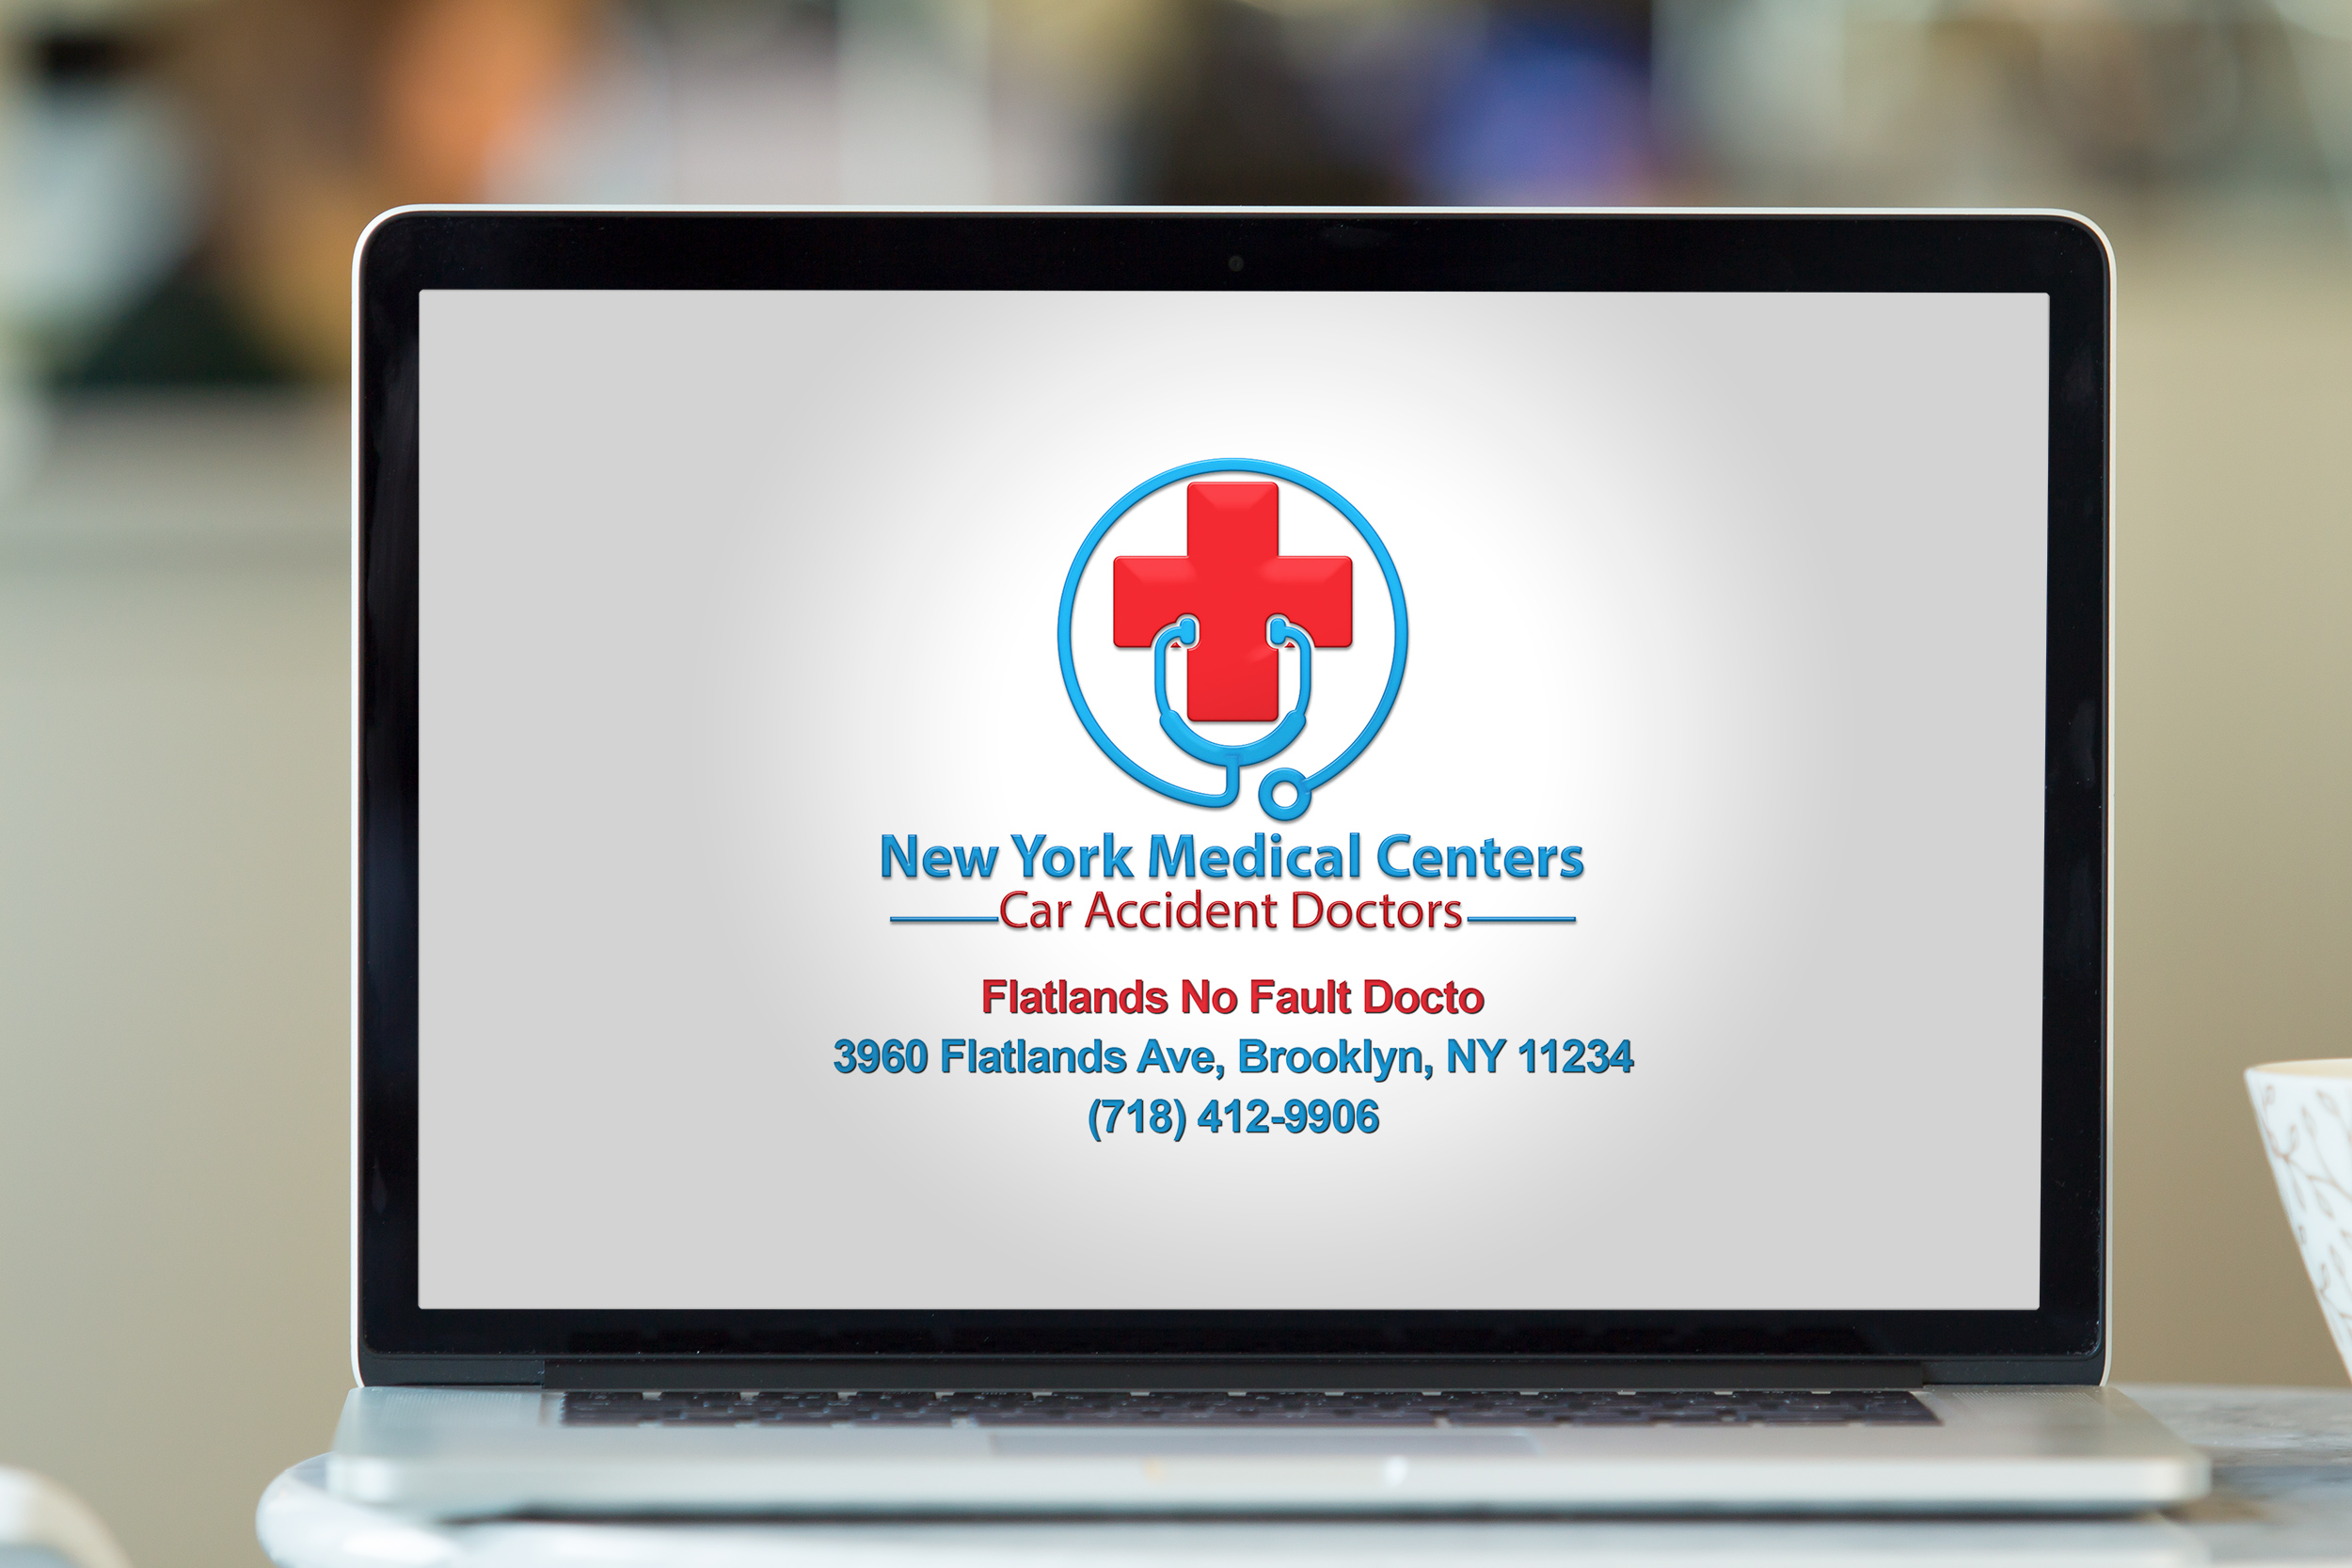 https://medicalcentersnewyork.com/locations/brooklyn/new-york-medical-center-flatlands-no-fault-doctor-workers-compensation-doctor/